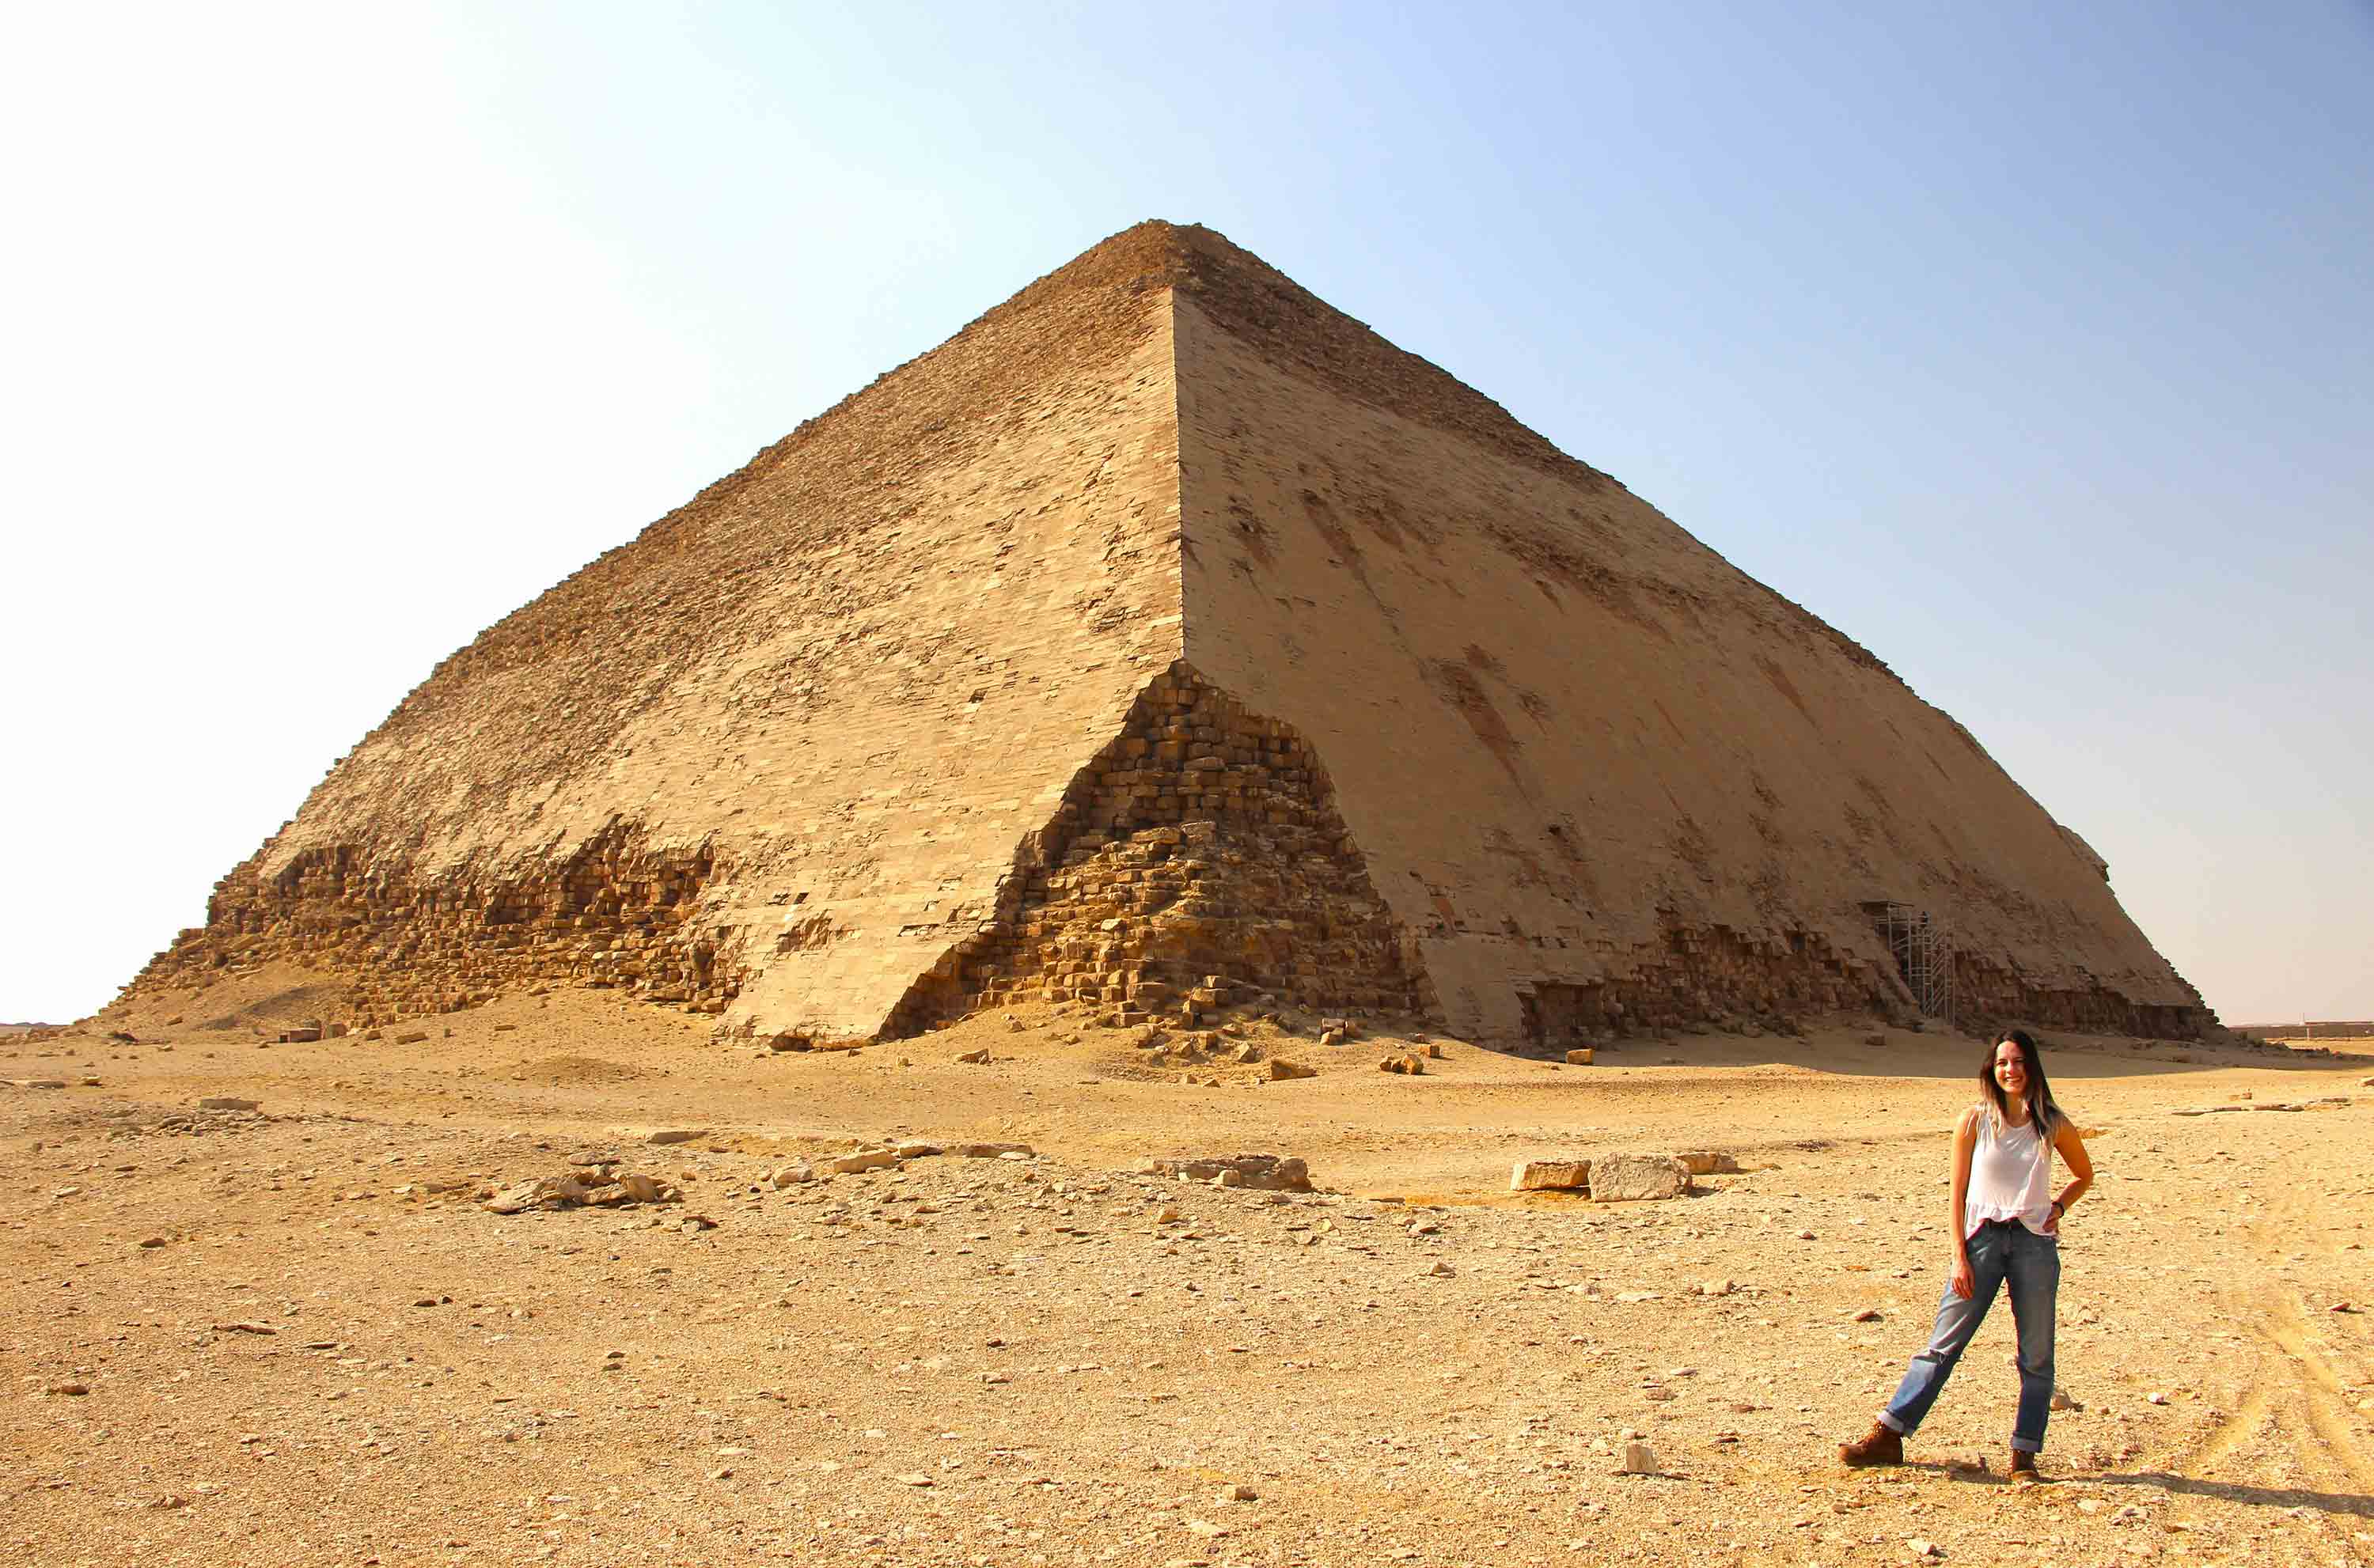 The Bent Pyramid of Dahshur, located near Cairo, Egypt